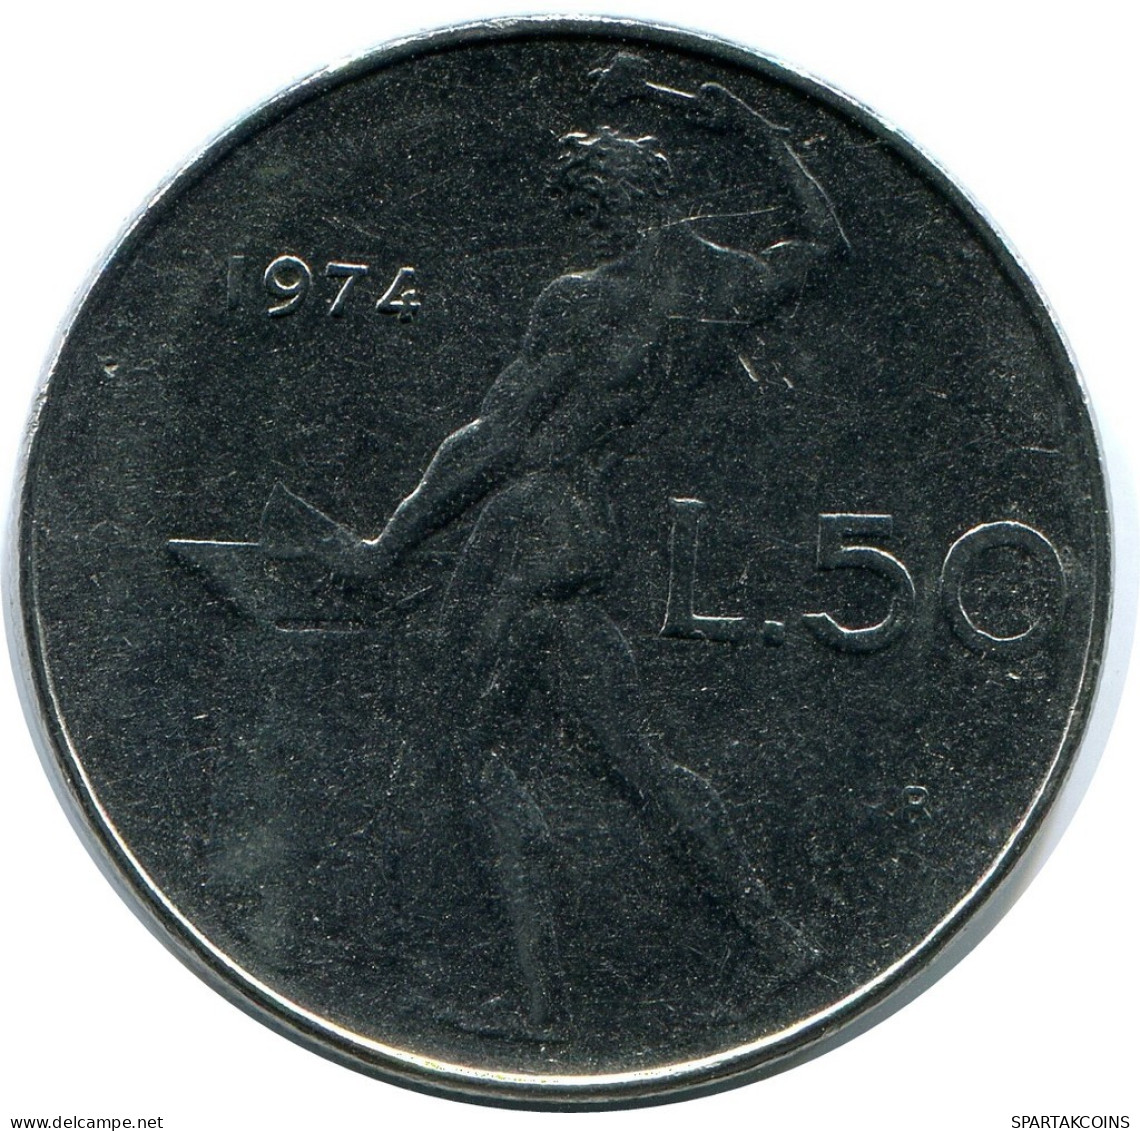 100 LIRE 1974 ITALY Coin #AZ492.U.A - 100 Lire